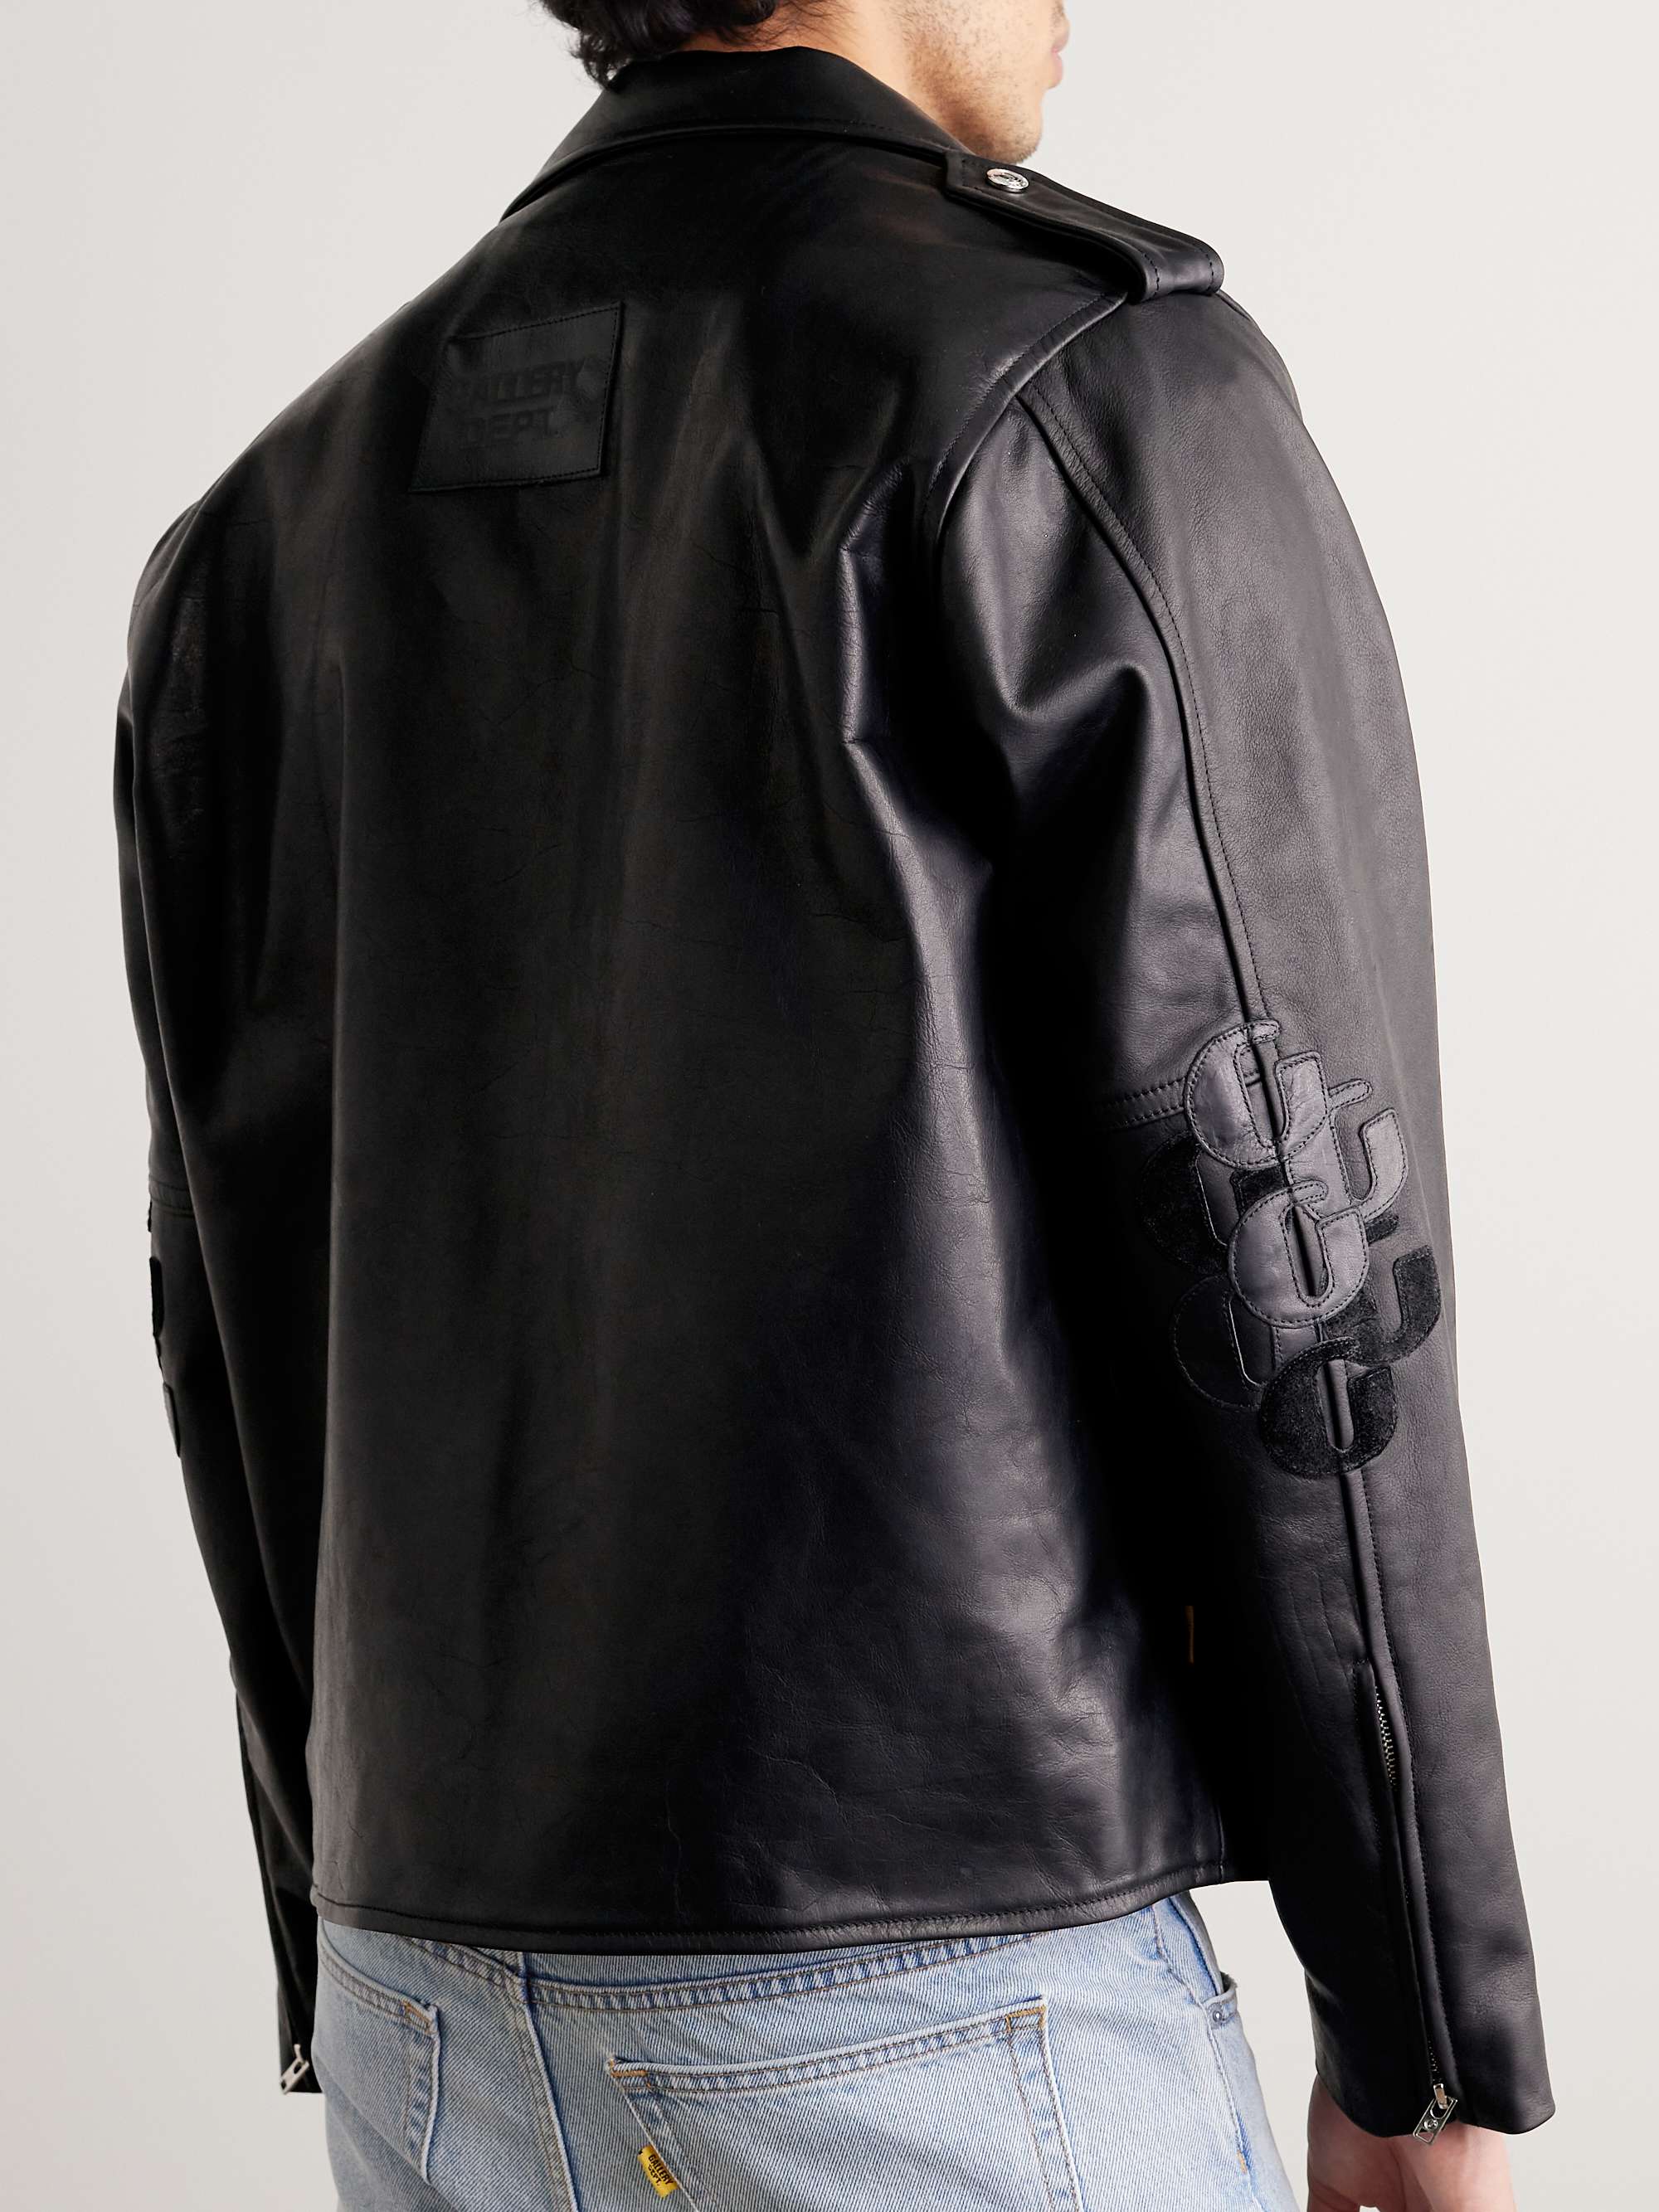 GALLERY DEPT. Leather Biker Jacket